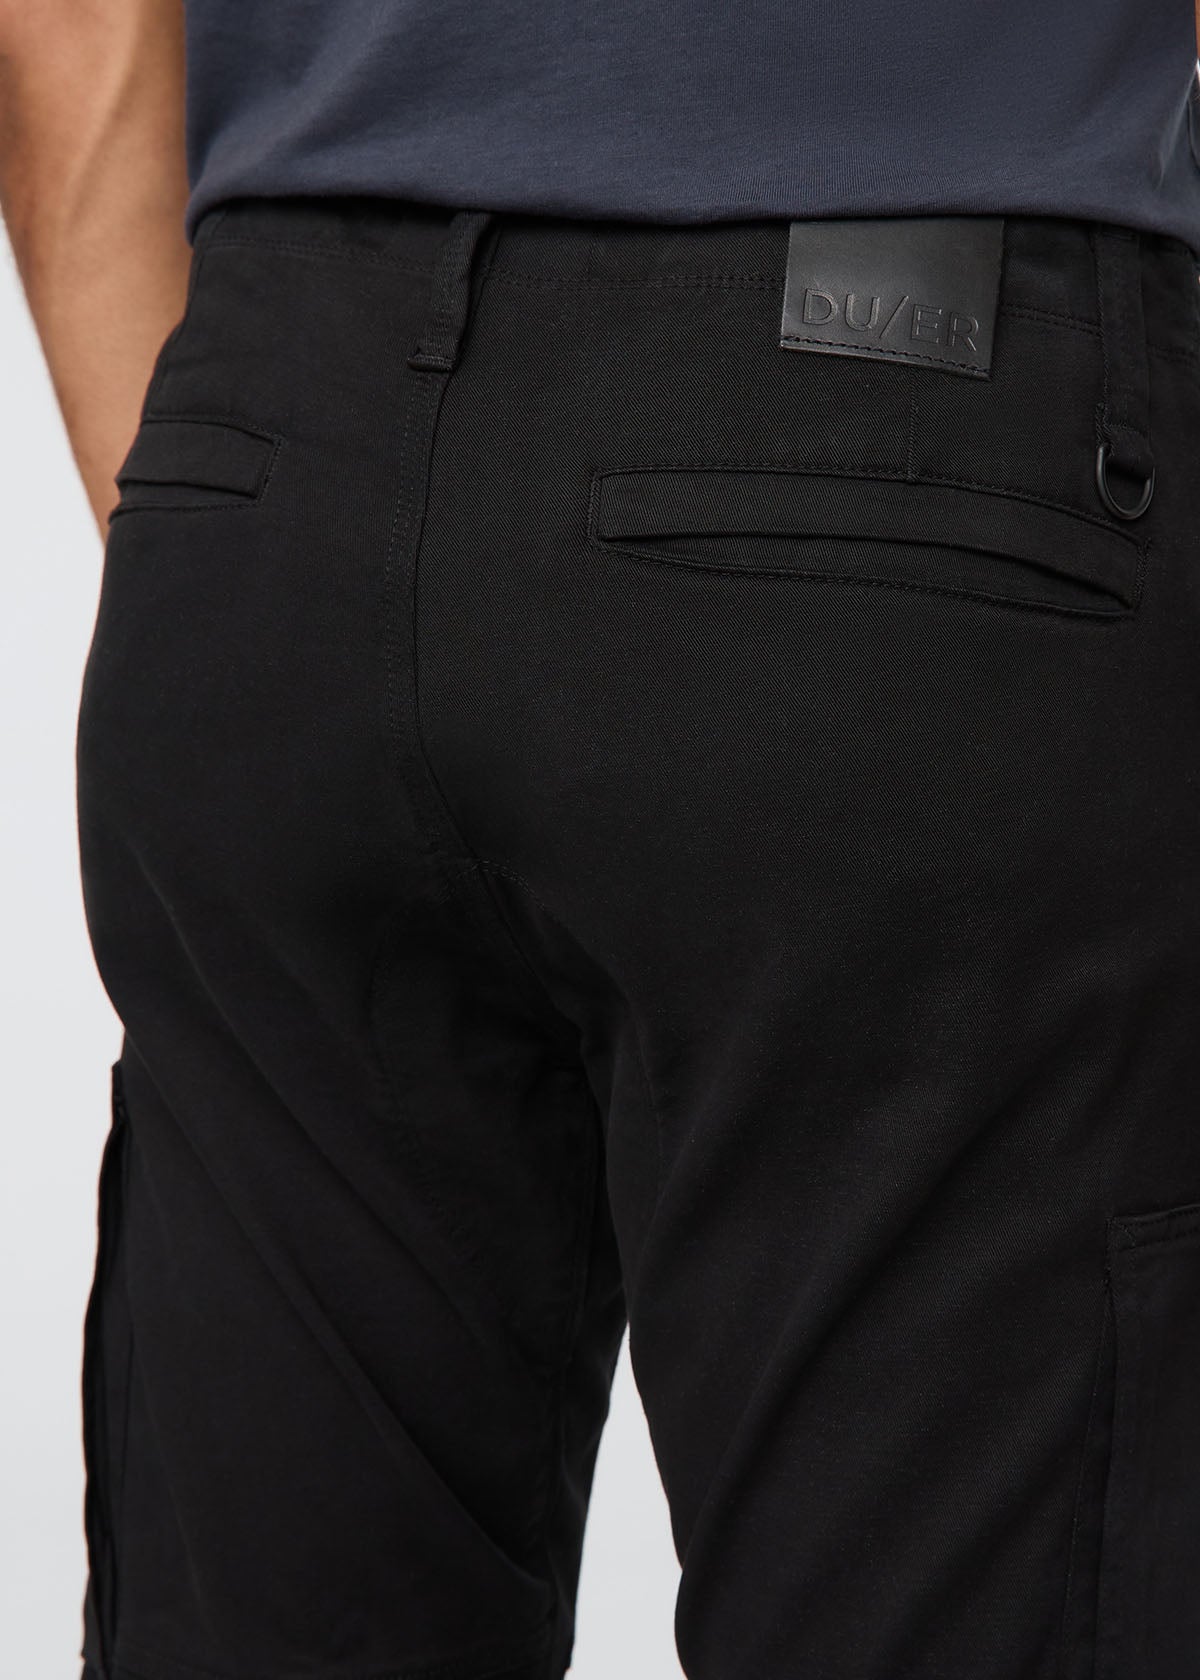 black athletic waterproof pant back waistband, pockets and keyring